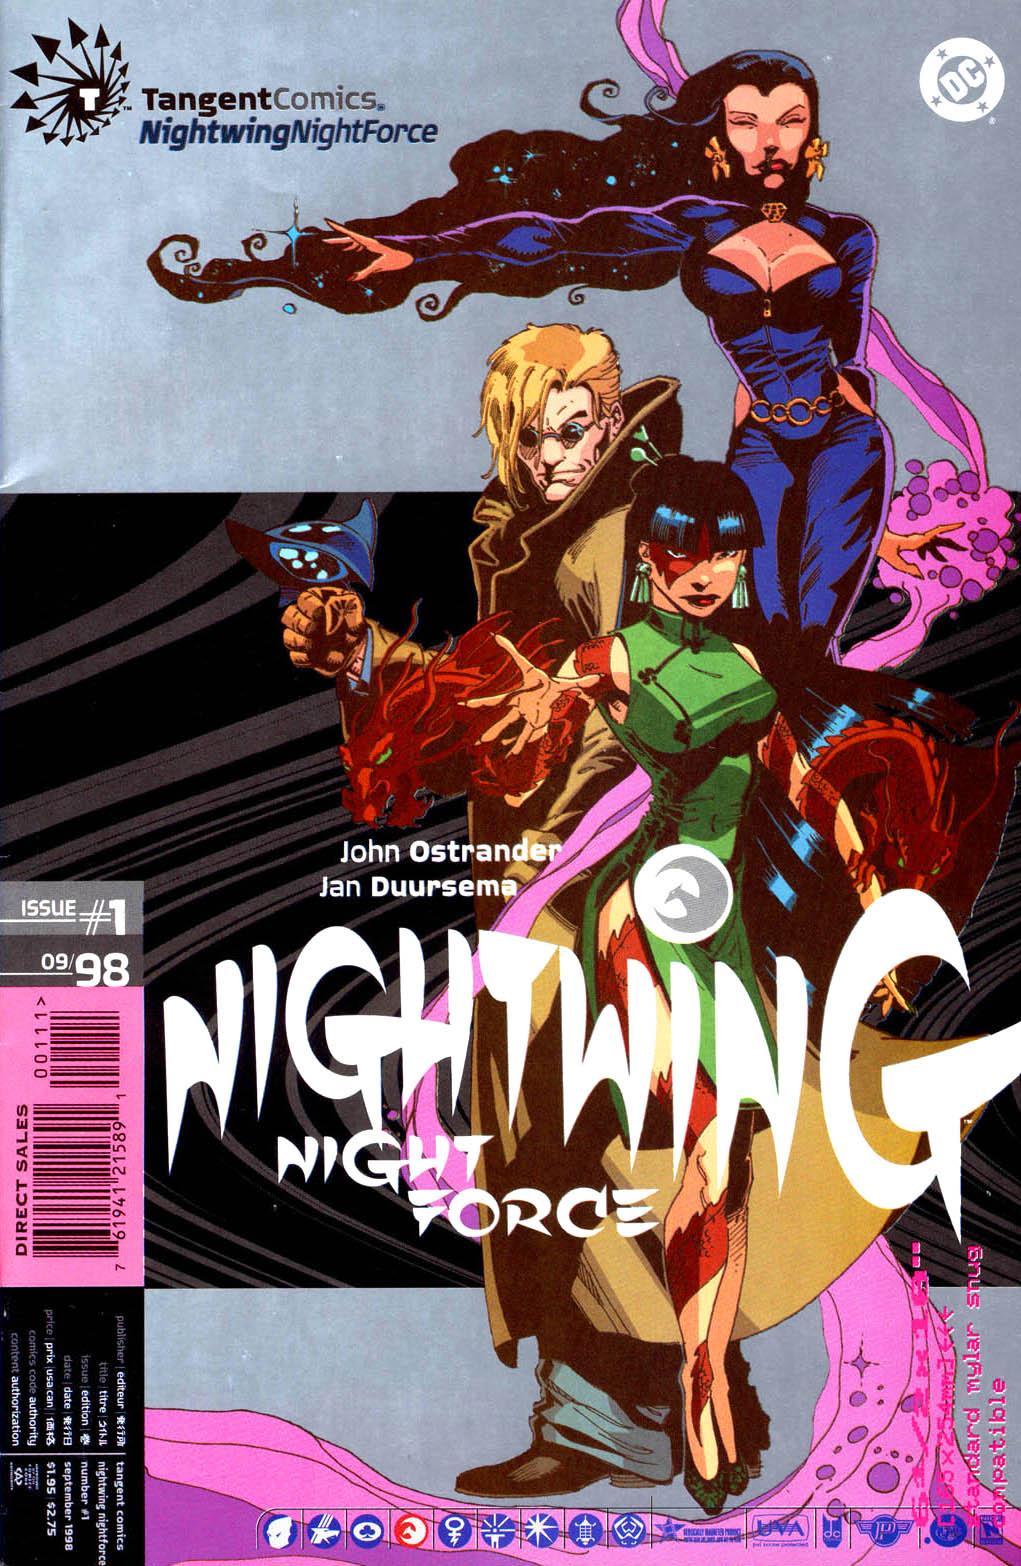 Tangent Comics: Nightwing: Night Force Vol. 1 #1